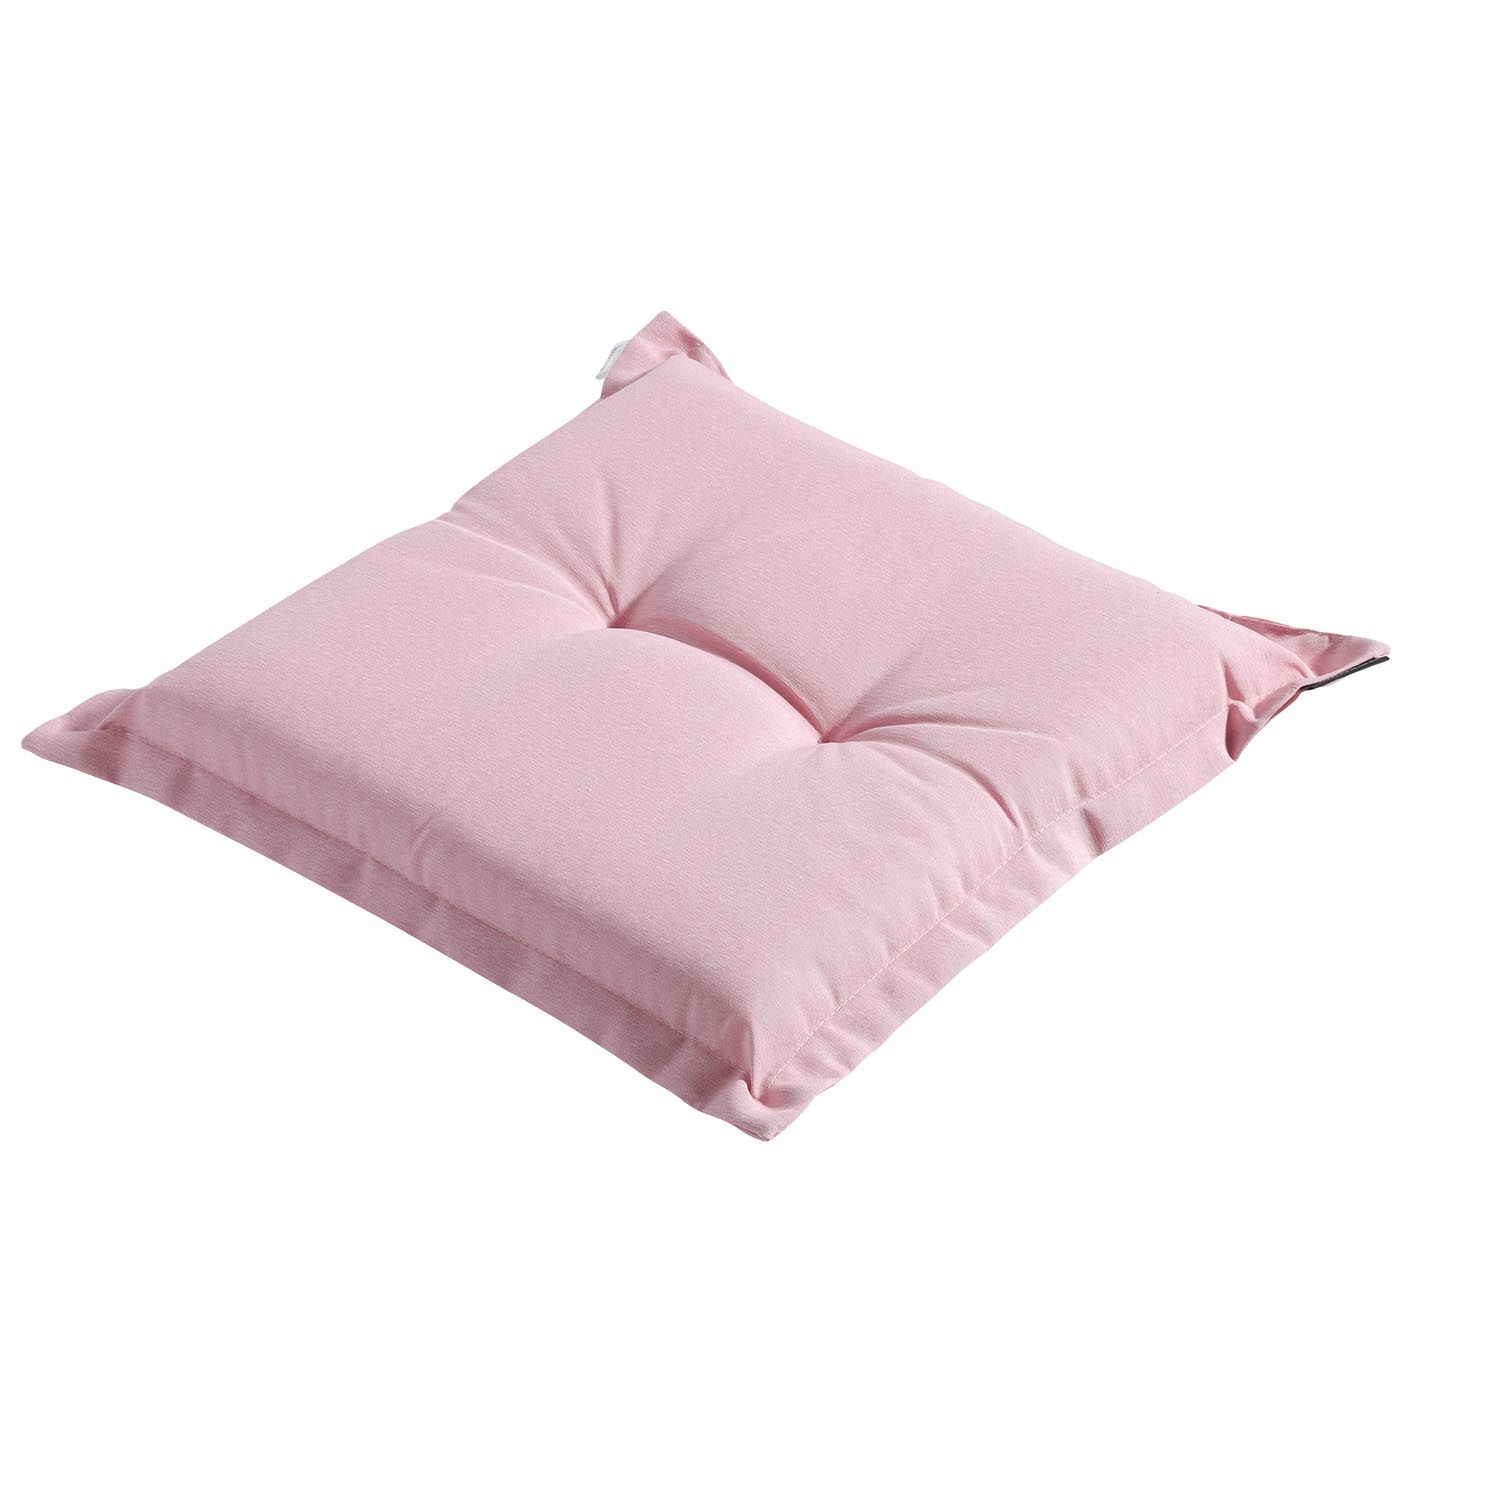 Hockerauflage 50x50cm - Panama soft pink